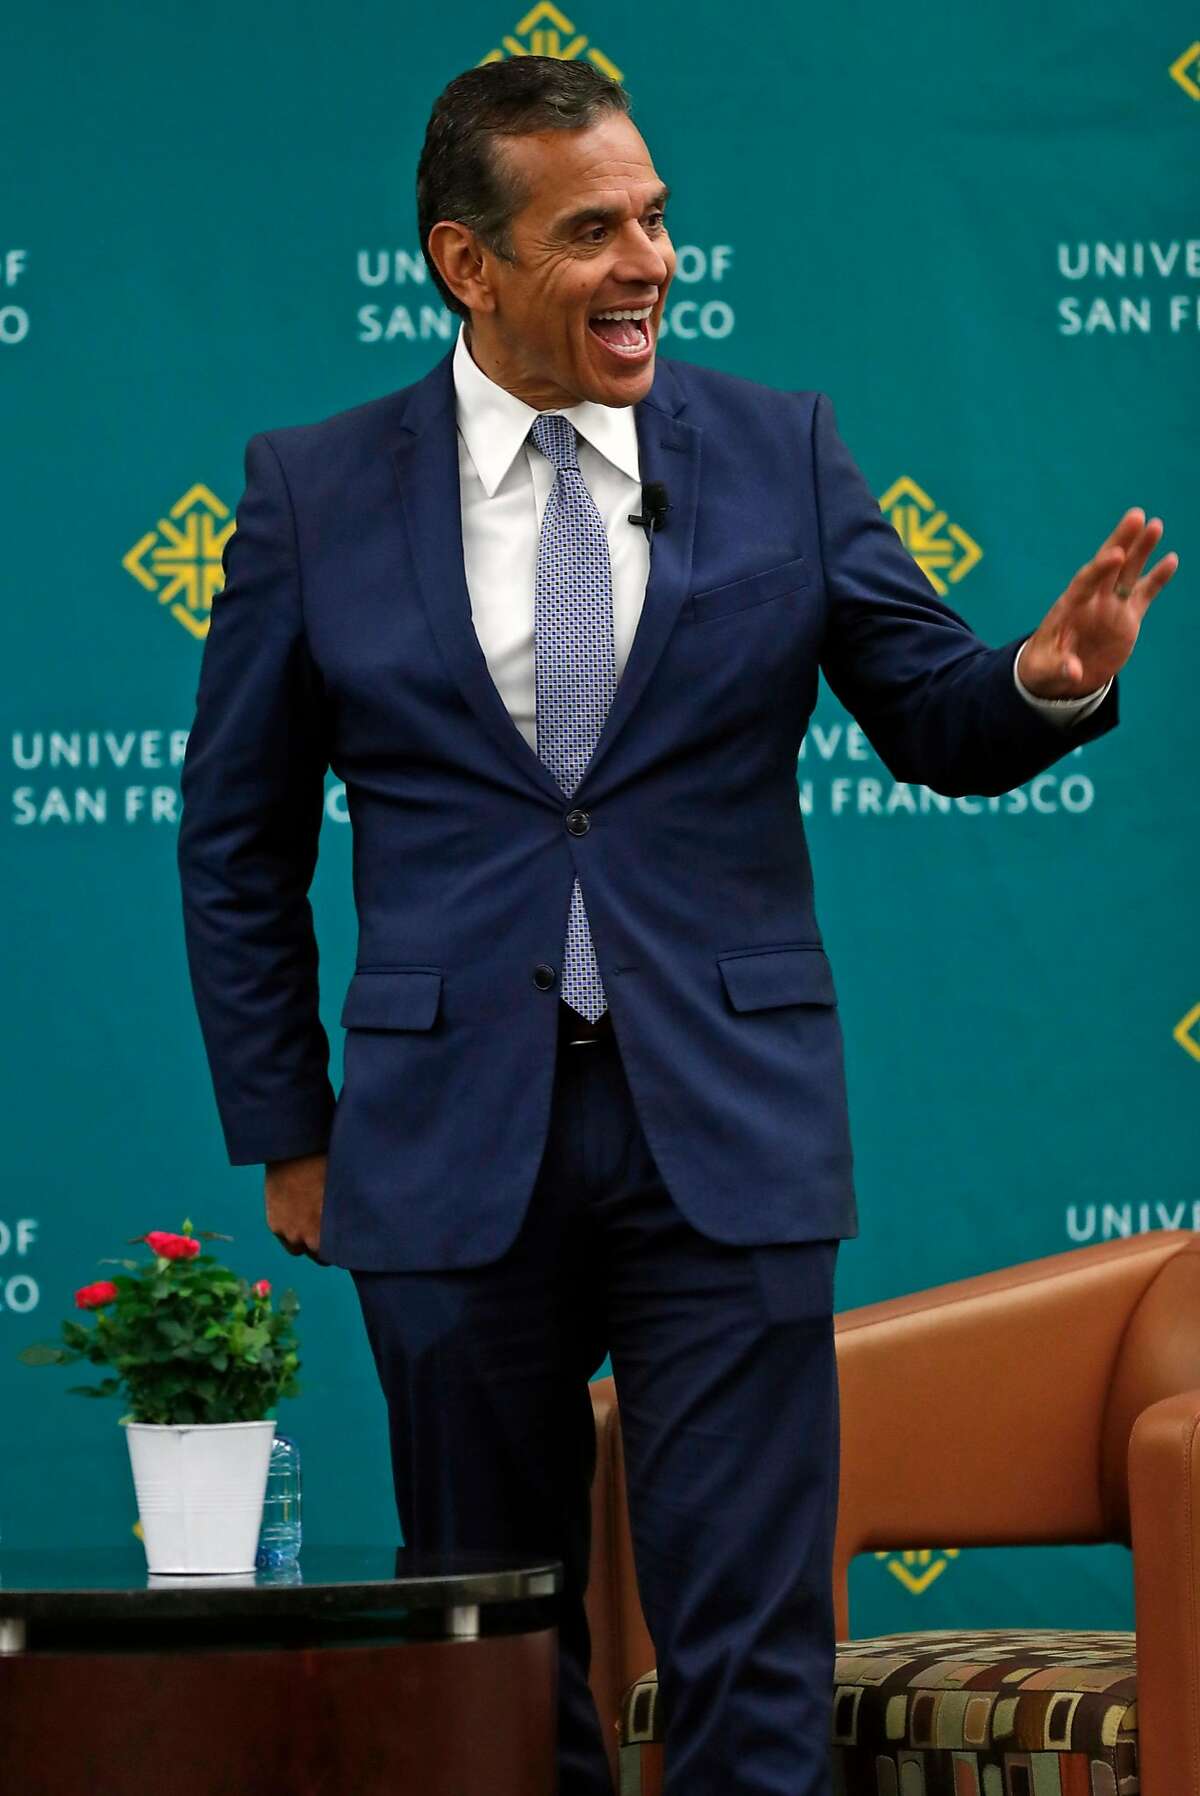 California Gubernatorial candidate Antonio Villaraigosa is interviewed at University of San Francisco in San Francisco, Calif., on Thursday, February 1, 2018.